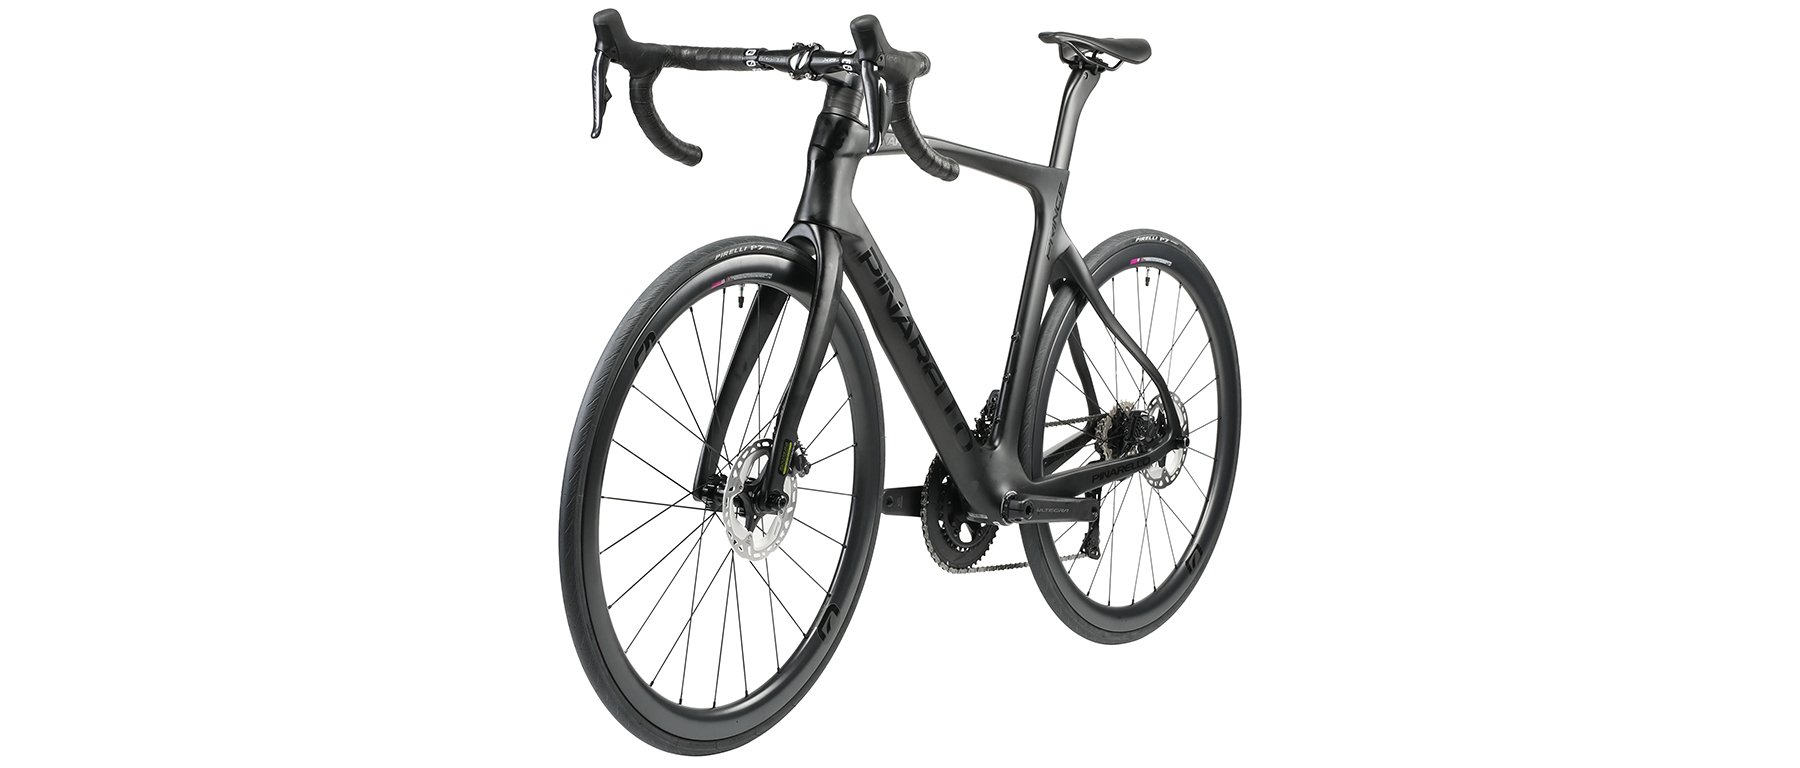 Pinarello Prince Ultegra R8170 Di2 Bicycle (Carbon Wheels)